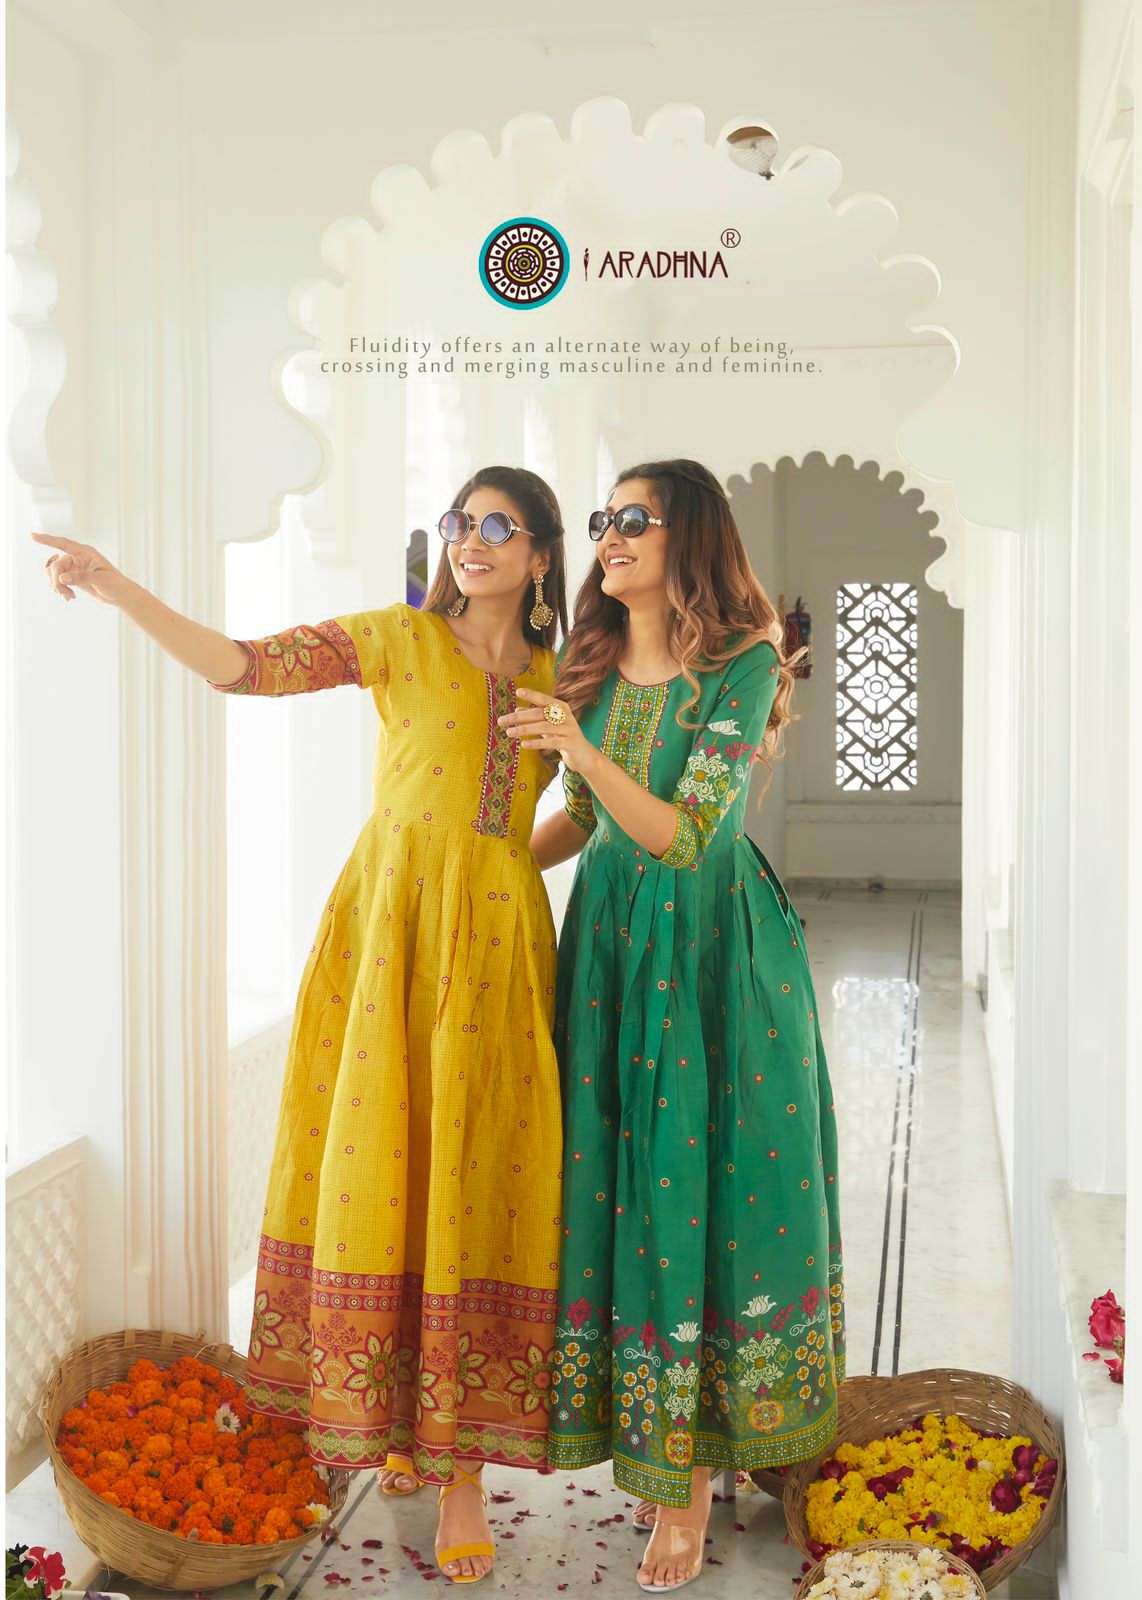 aradhna fashion bonanza vol 2 stylish designer long kurti catalogue manufacturer surat